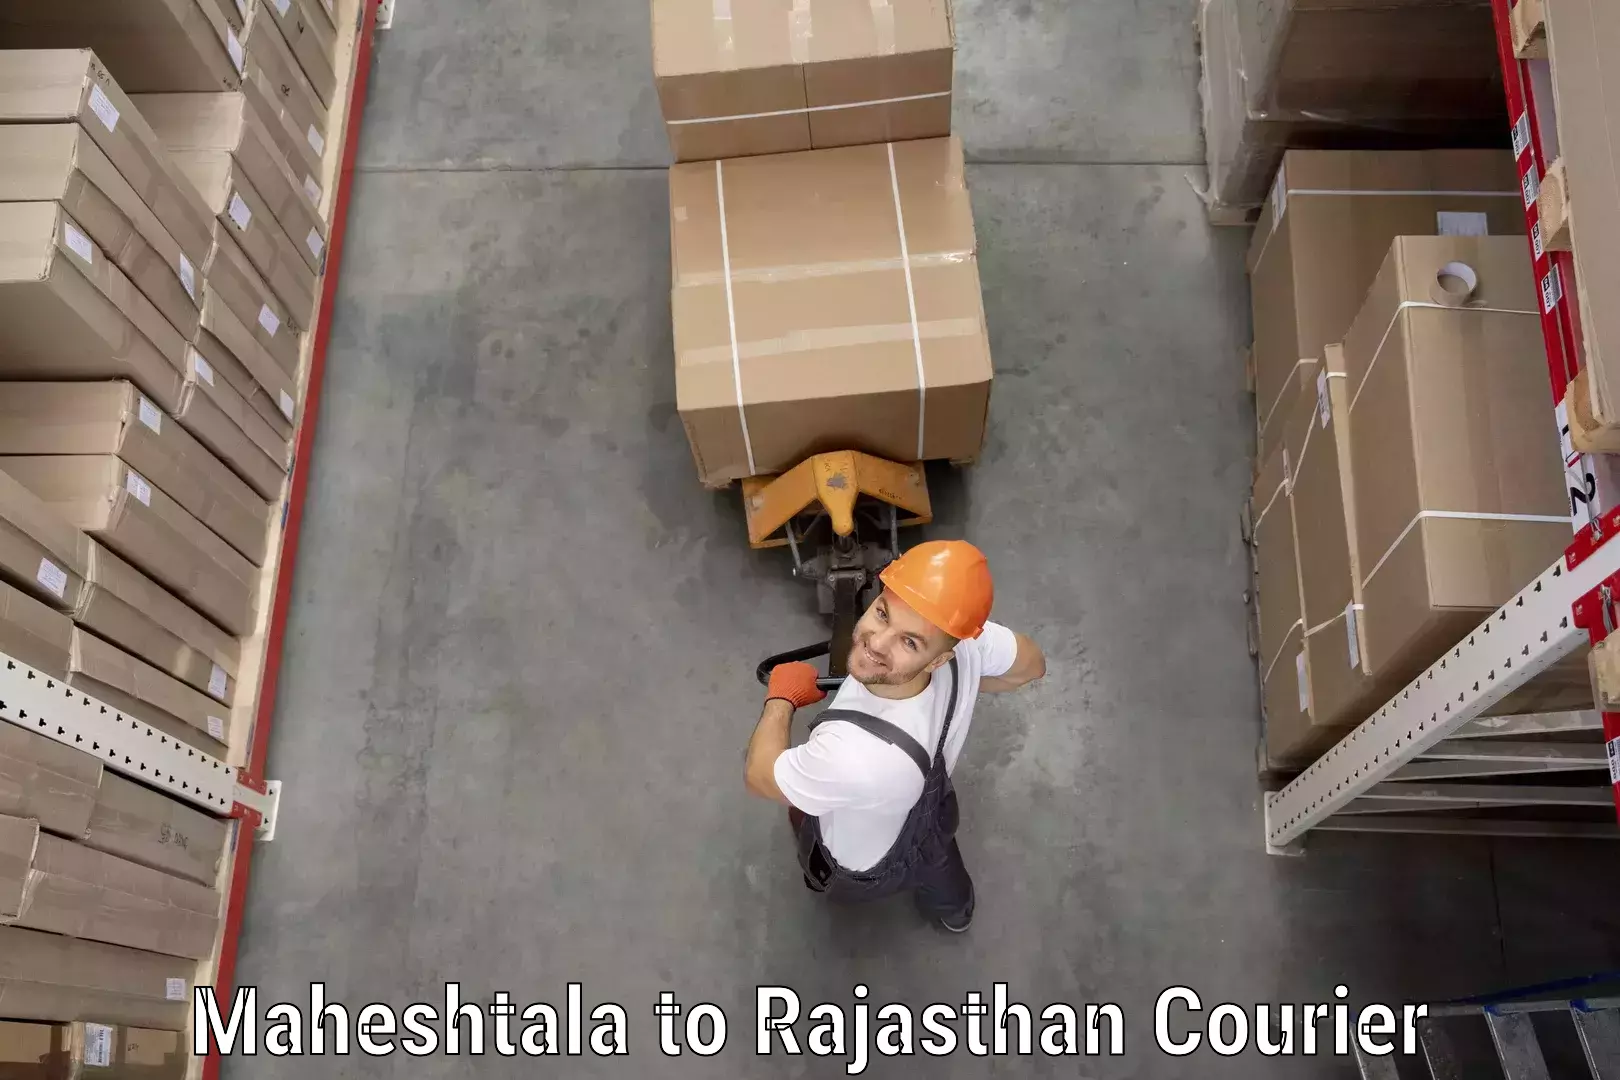 Global logistics network Maheshtala to Rajasthan